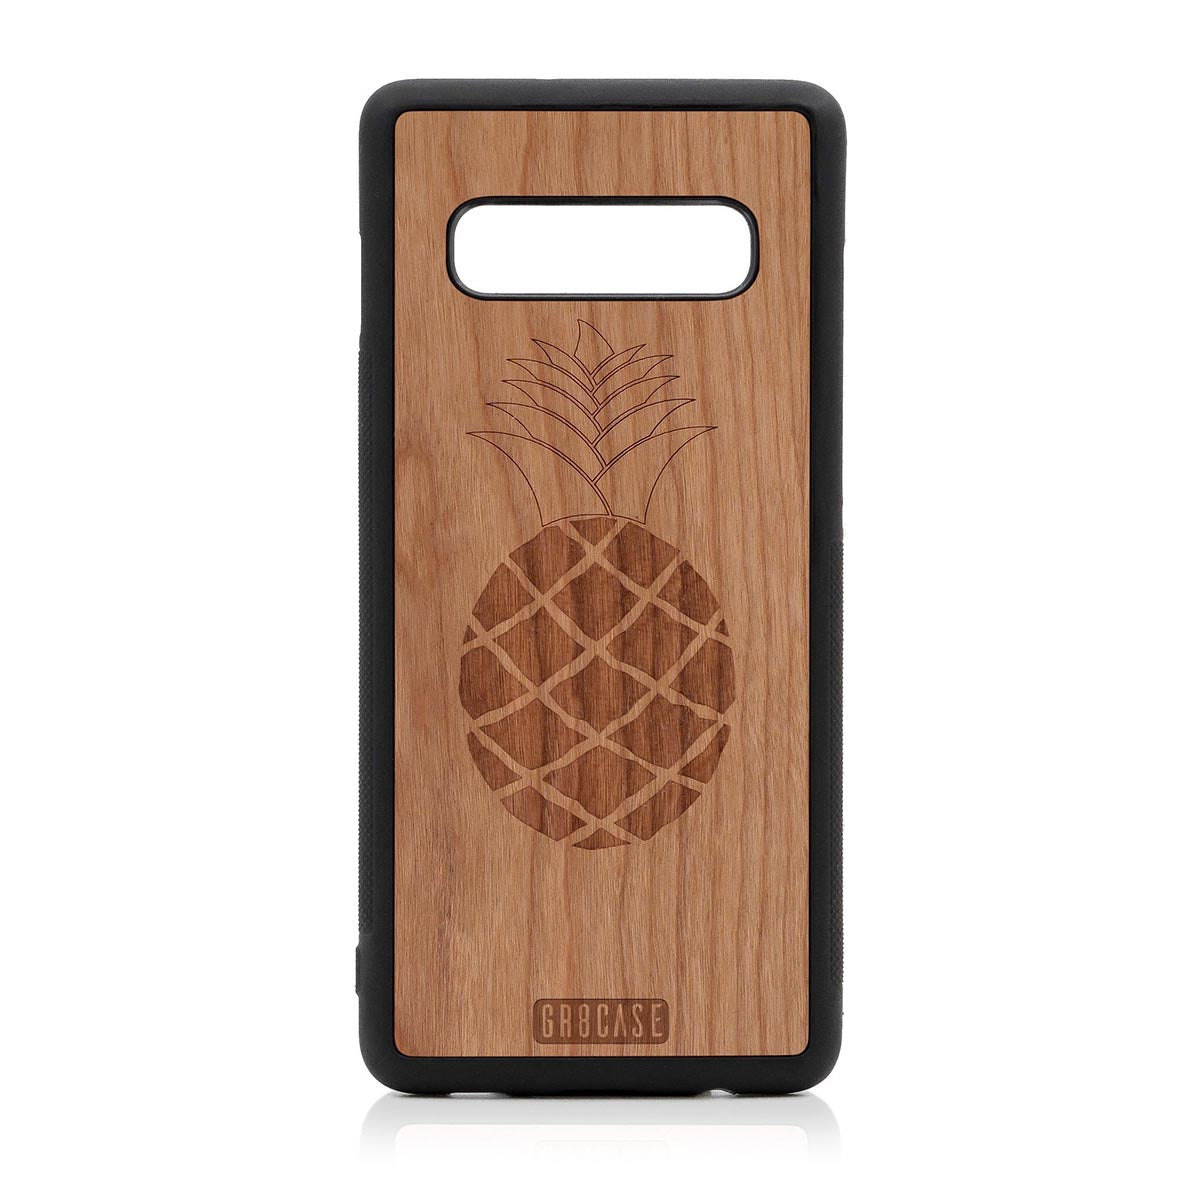 Pineapple Design Wood Case Samsung Galaxy S10 Plus by GR8CASE